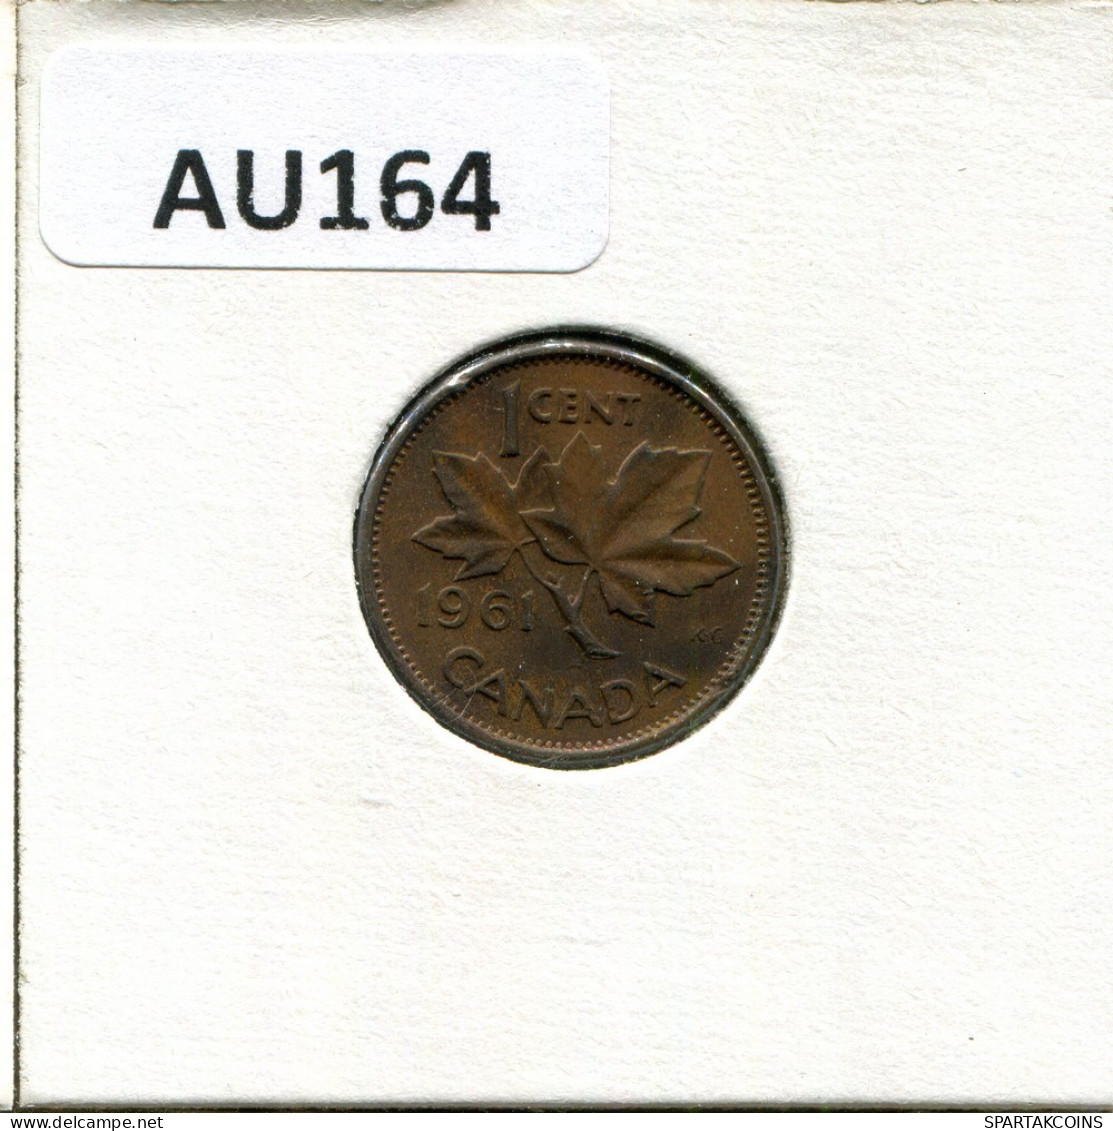 1 CENT 1961 KANADA CANADA Münze #AU164.D.A - Canada